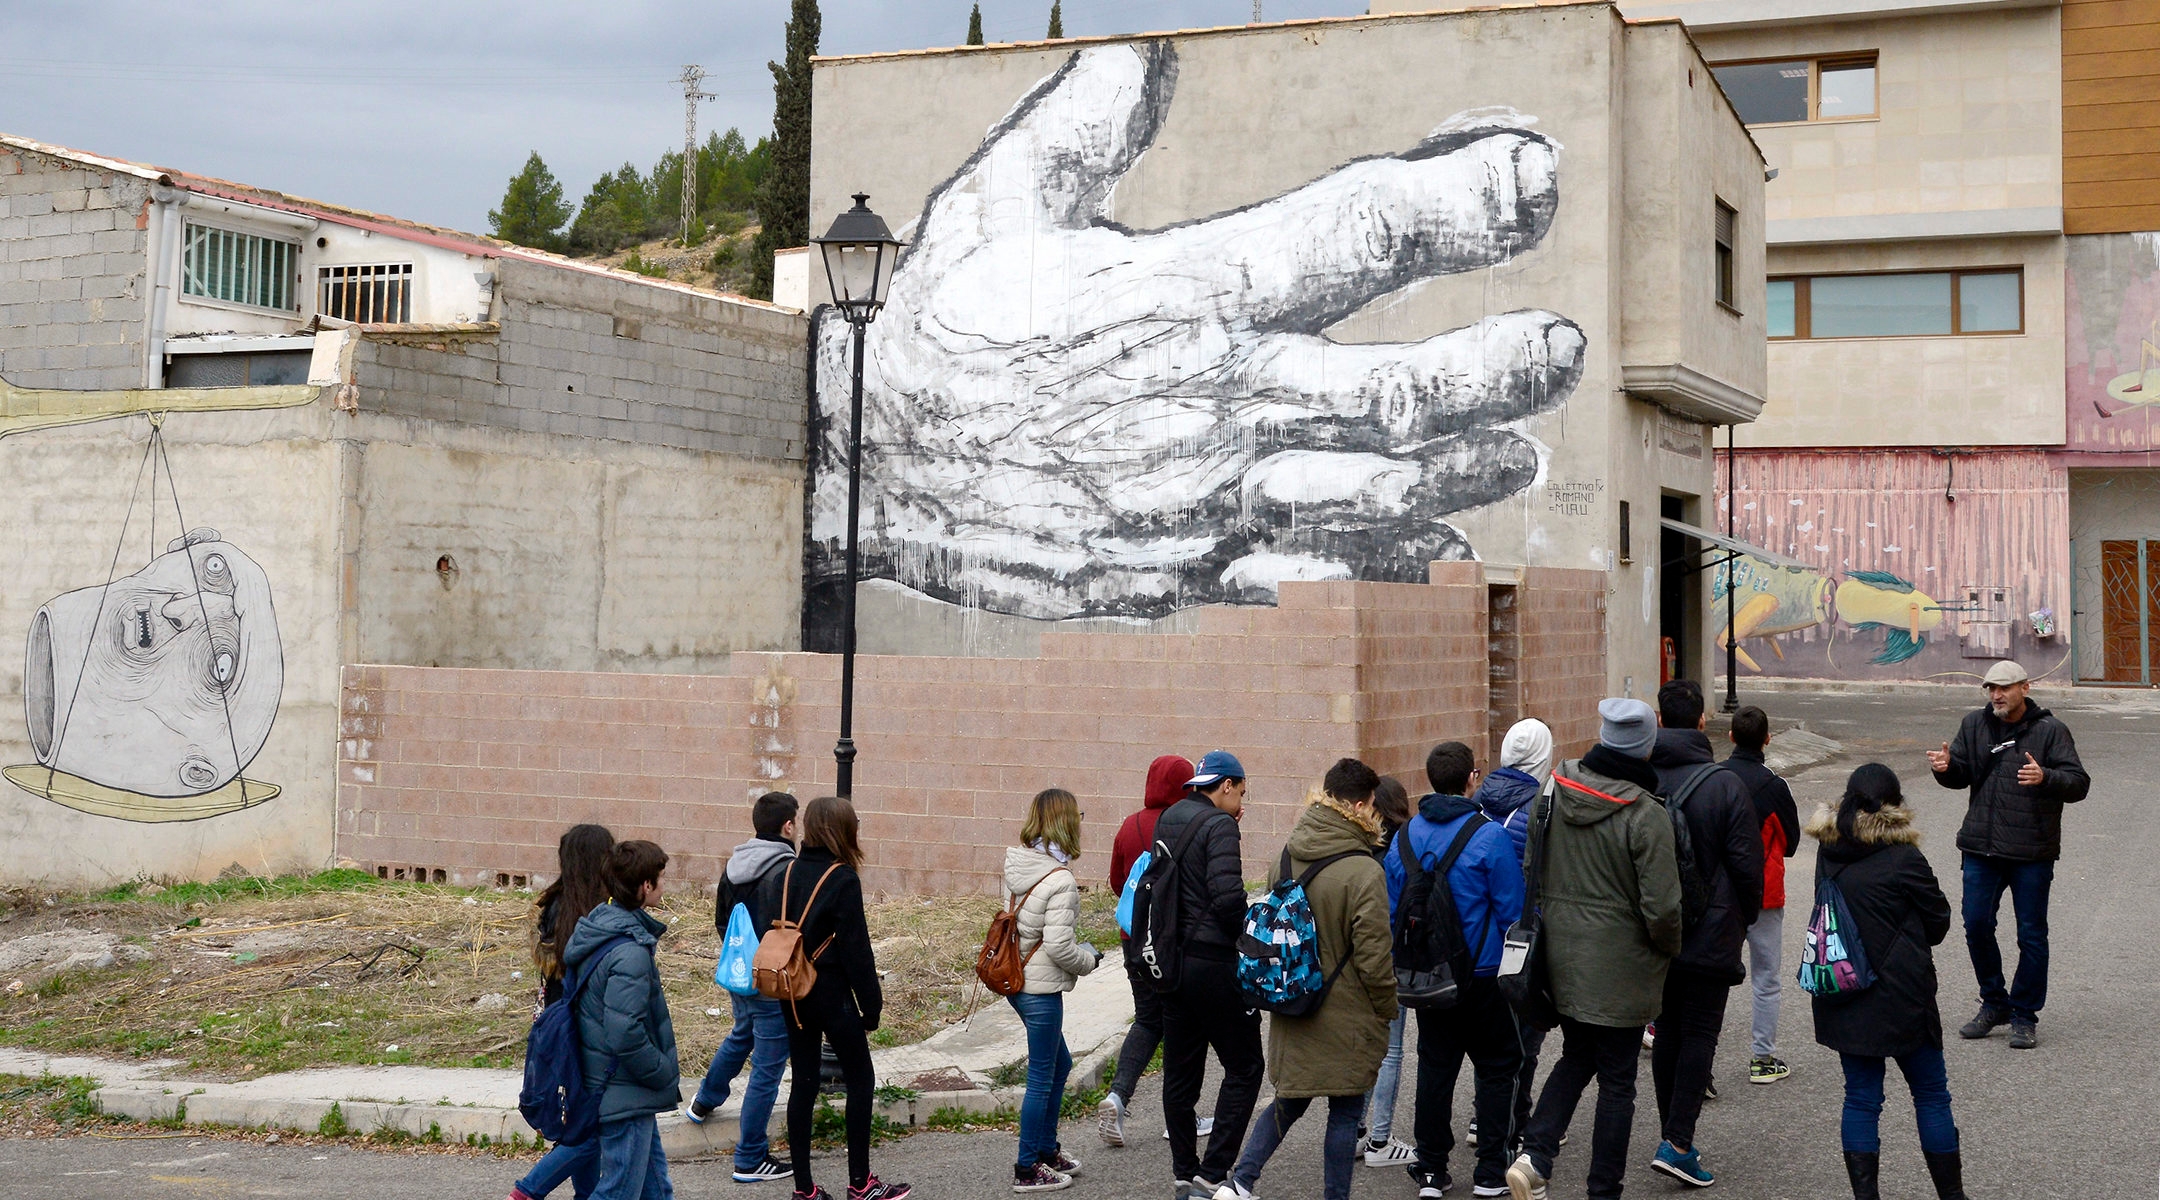 A teacher talking to students in the town of Fanzara, Vaencia, Spain on December 15, 2016. (Jose Jordan/AFP via Getty Images)